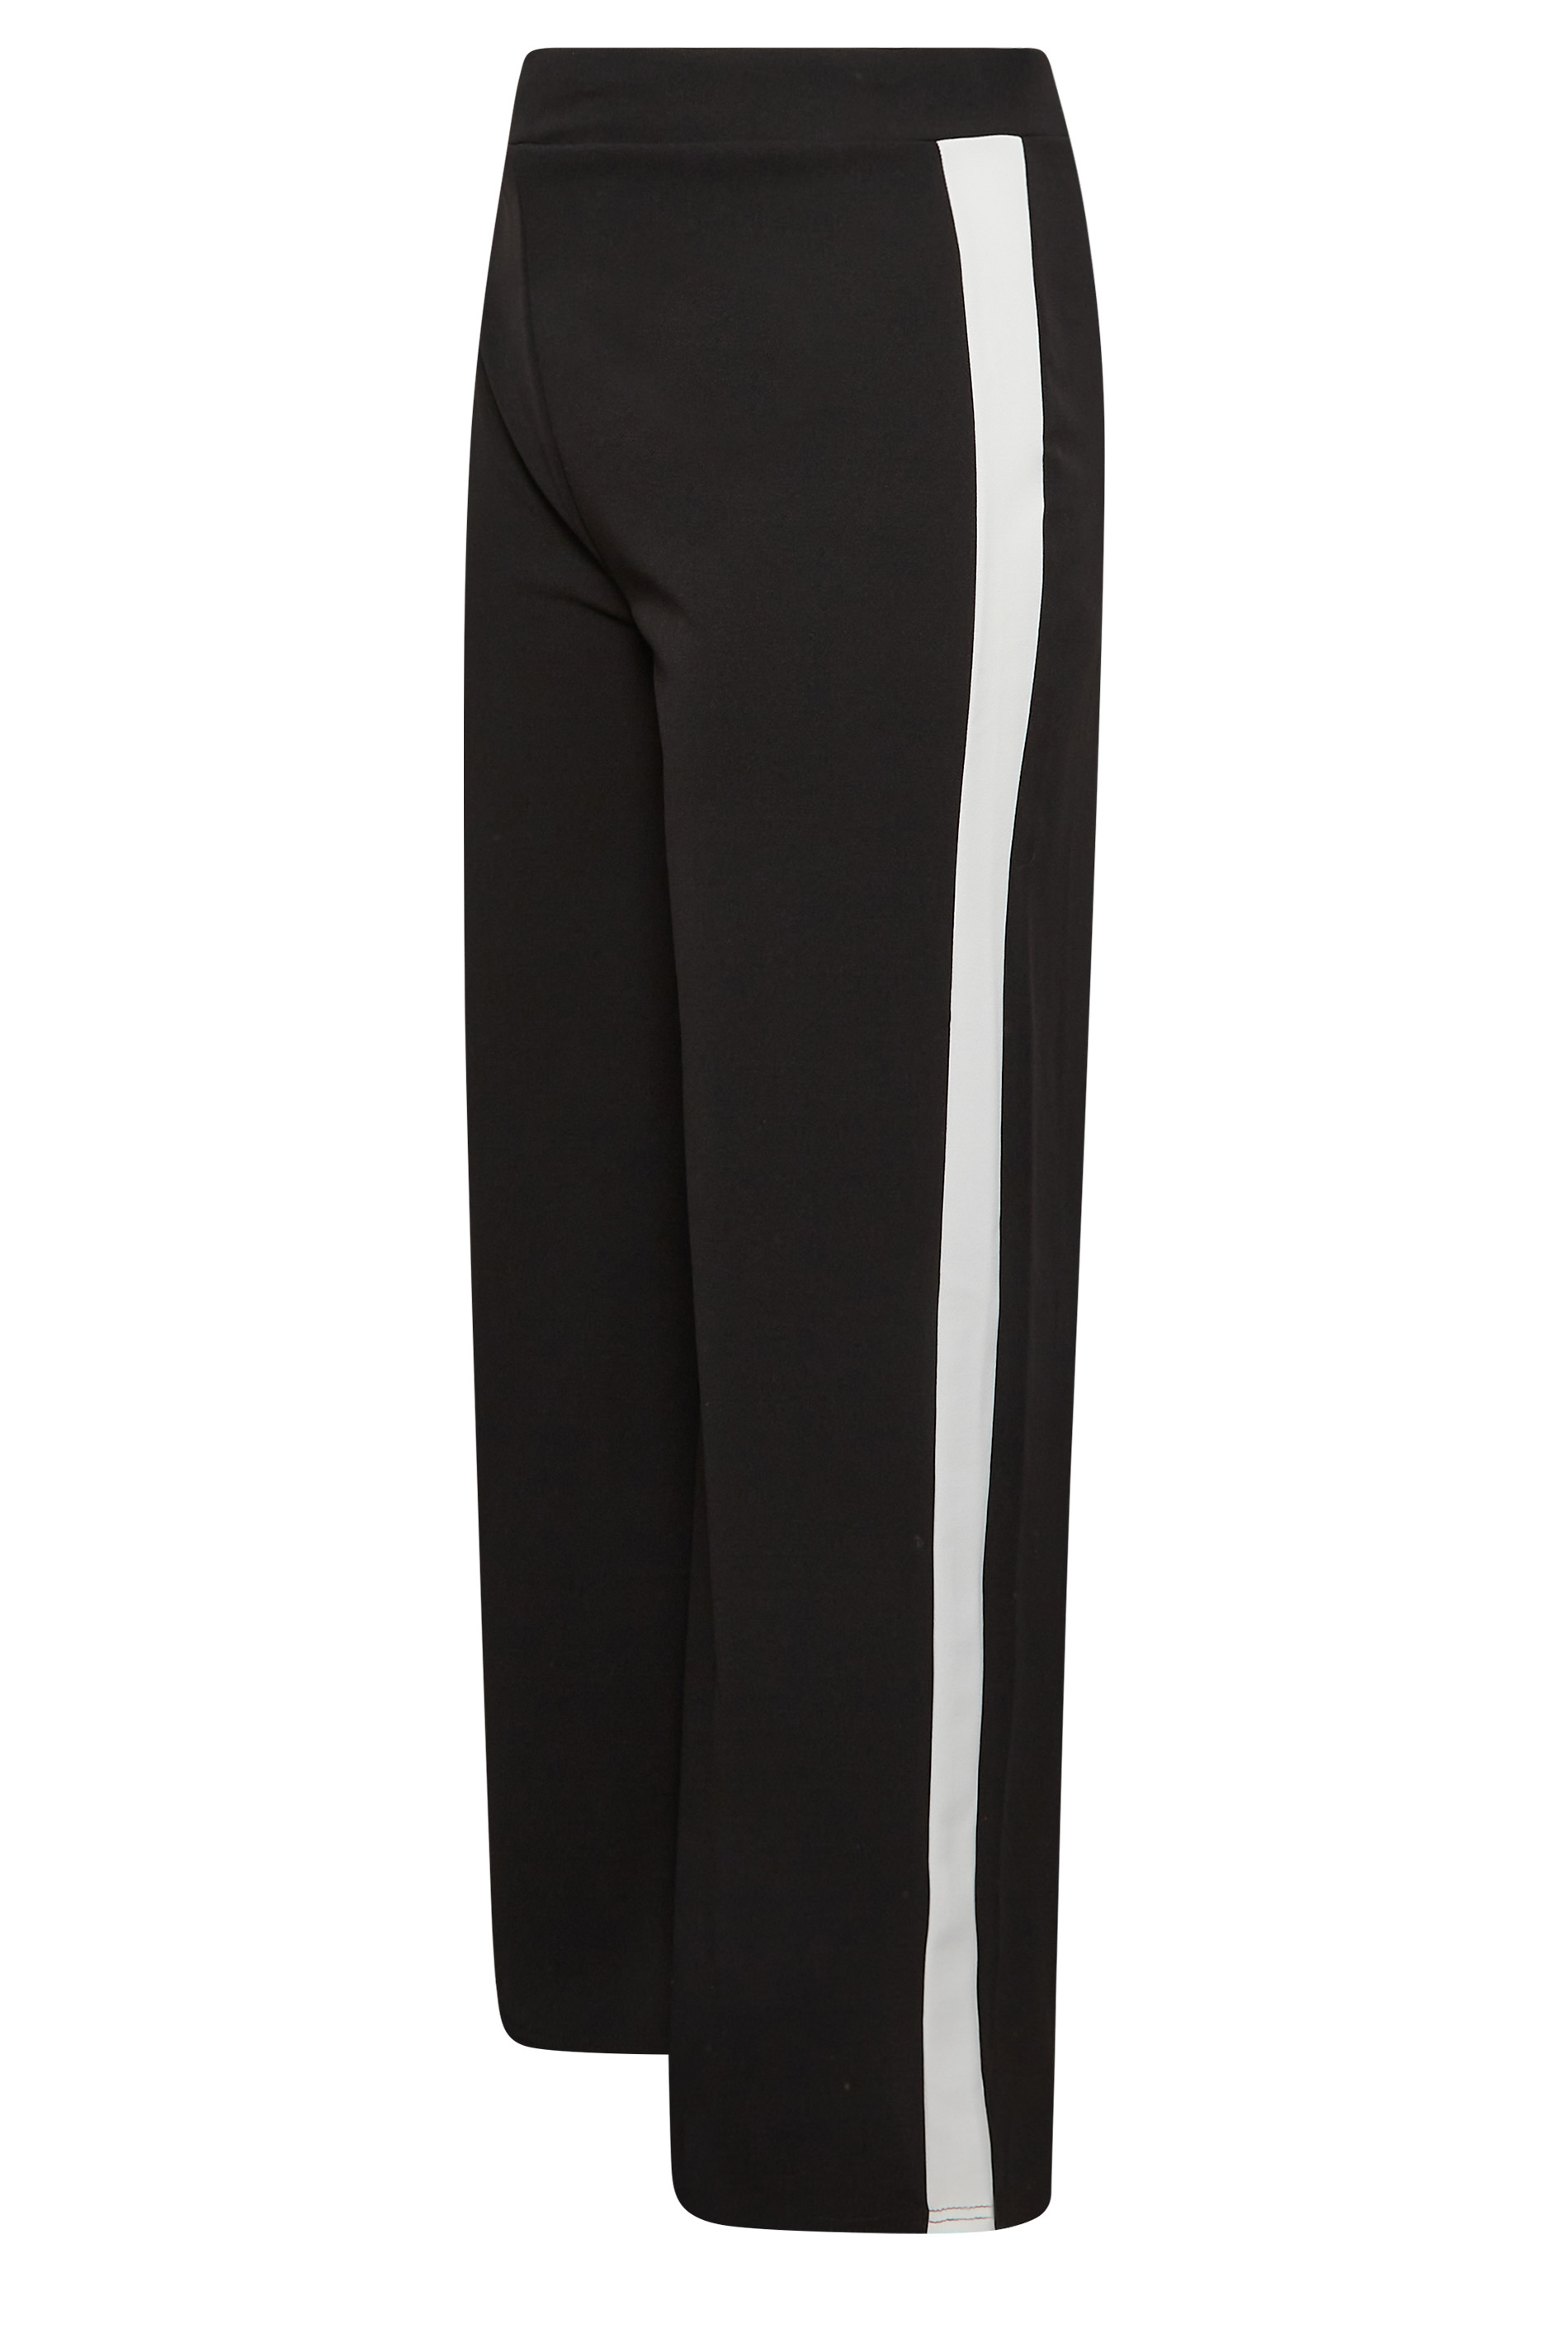 Men's Adjustable Side Tab Tuxedo Pant - BLACK - 100% WORSTED WOOL –  Hardwick.com